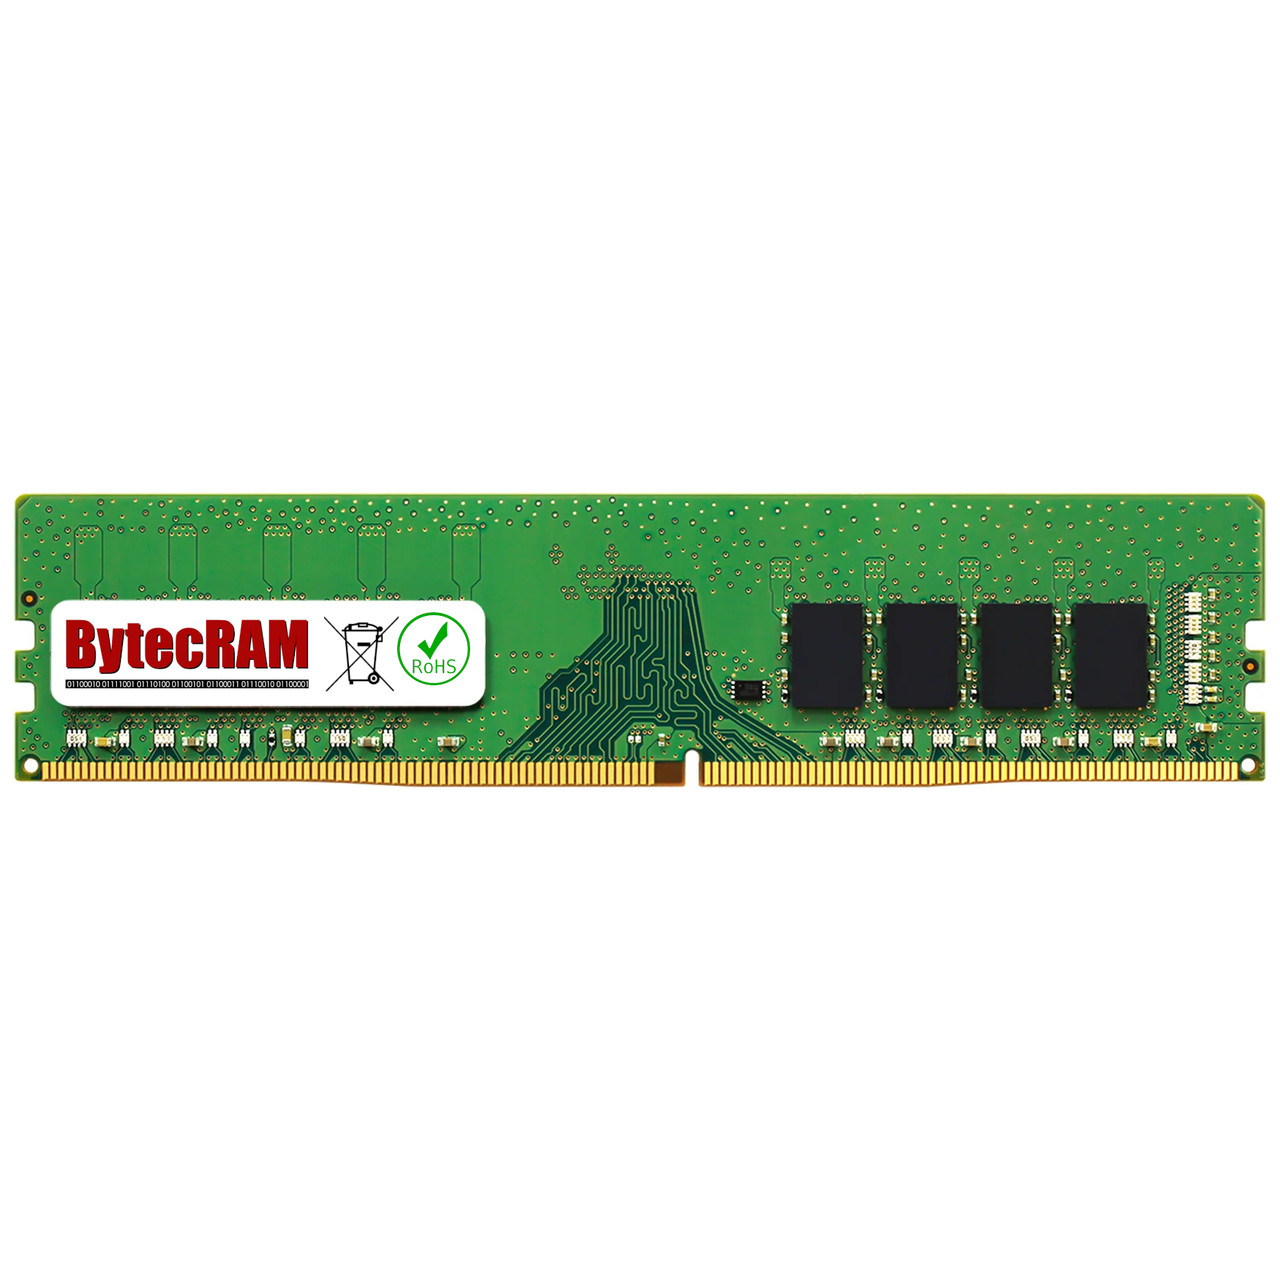 eBay*16GB Acer Nitro N50-620-UR12 DDR4 2666MHz UDIMM Memory RAM Upgrade